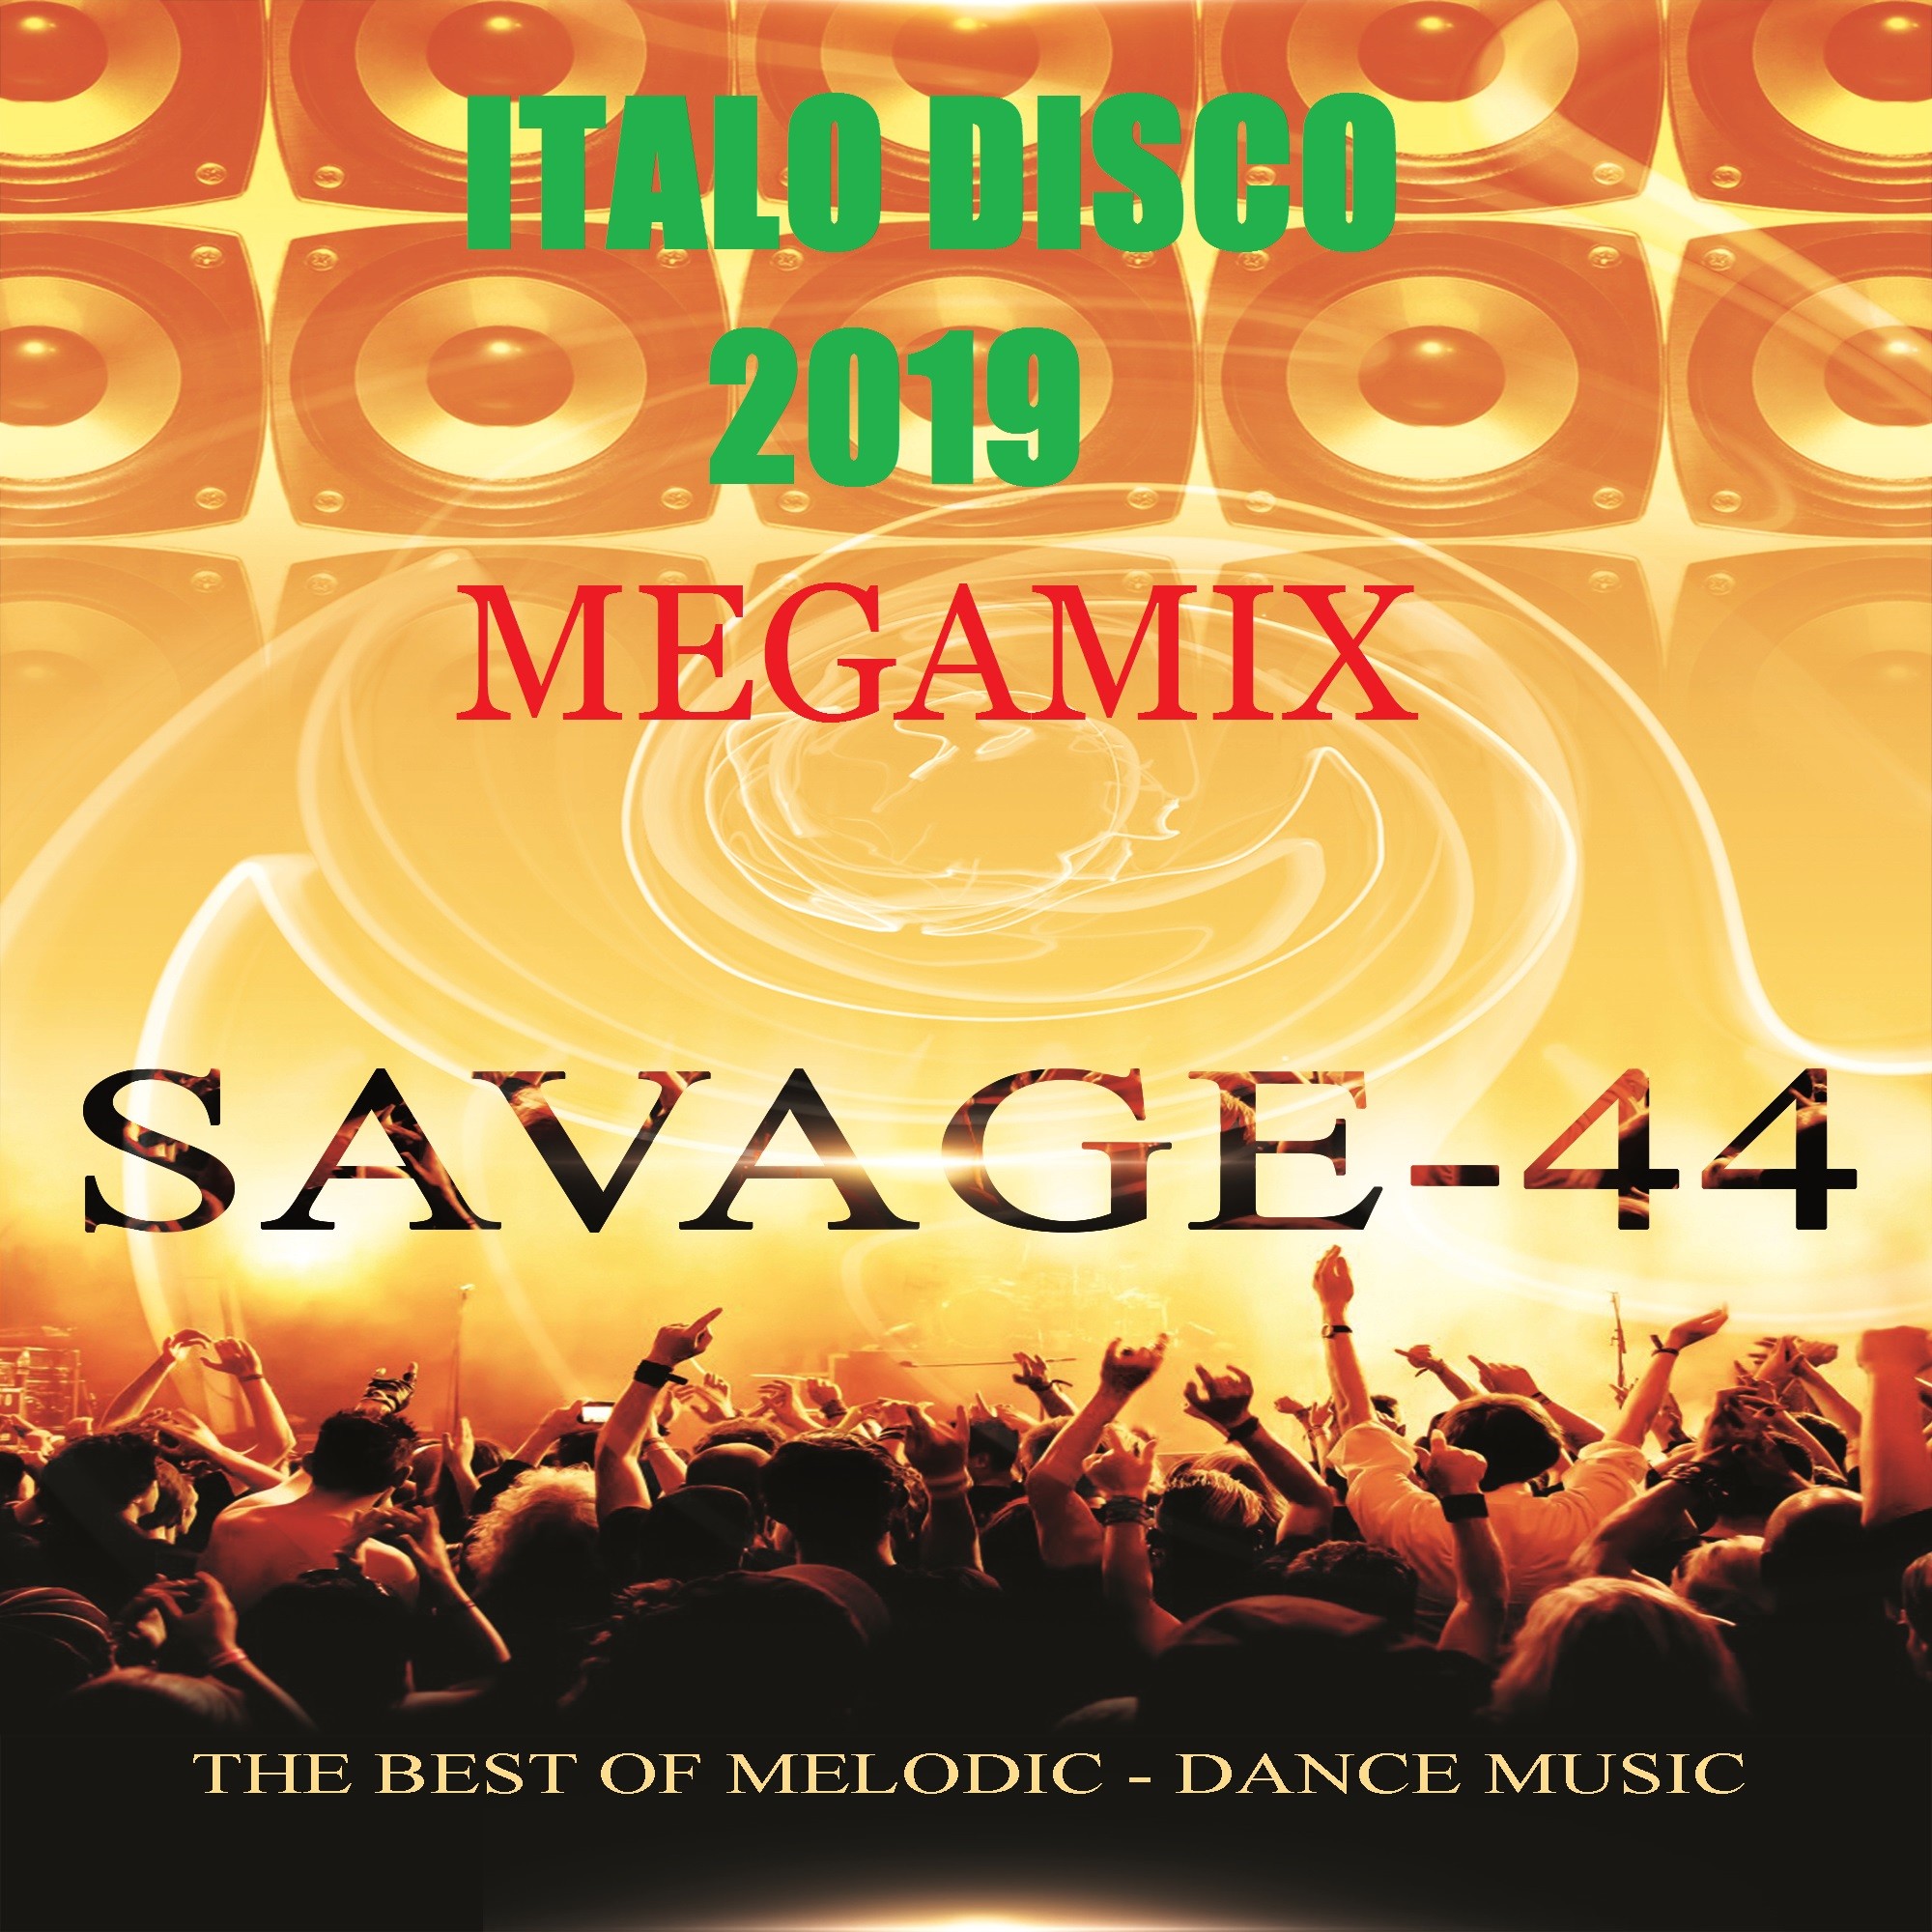 Savage 44 the music ring. DJ Savage 44. Саваж 44 Евроданс. Саваж 44 радио. Мегамикс музыка.